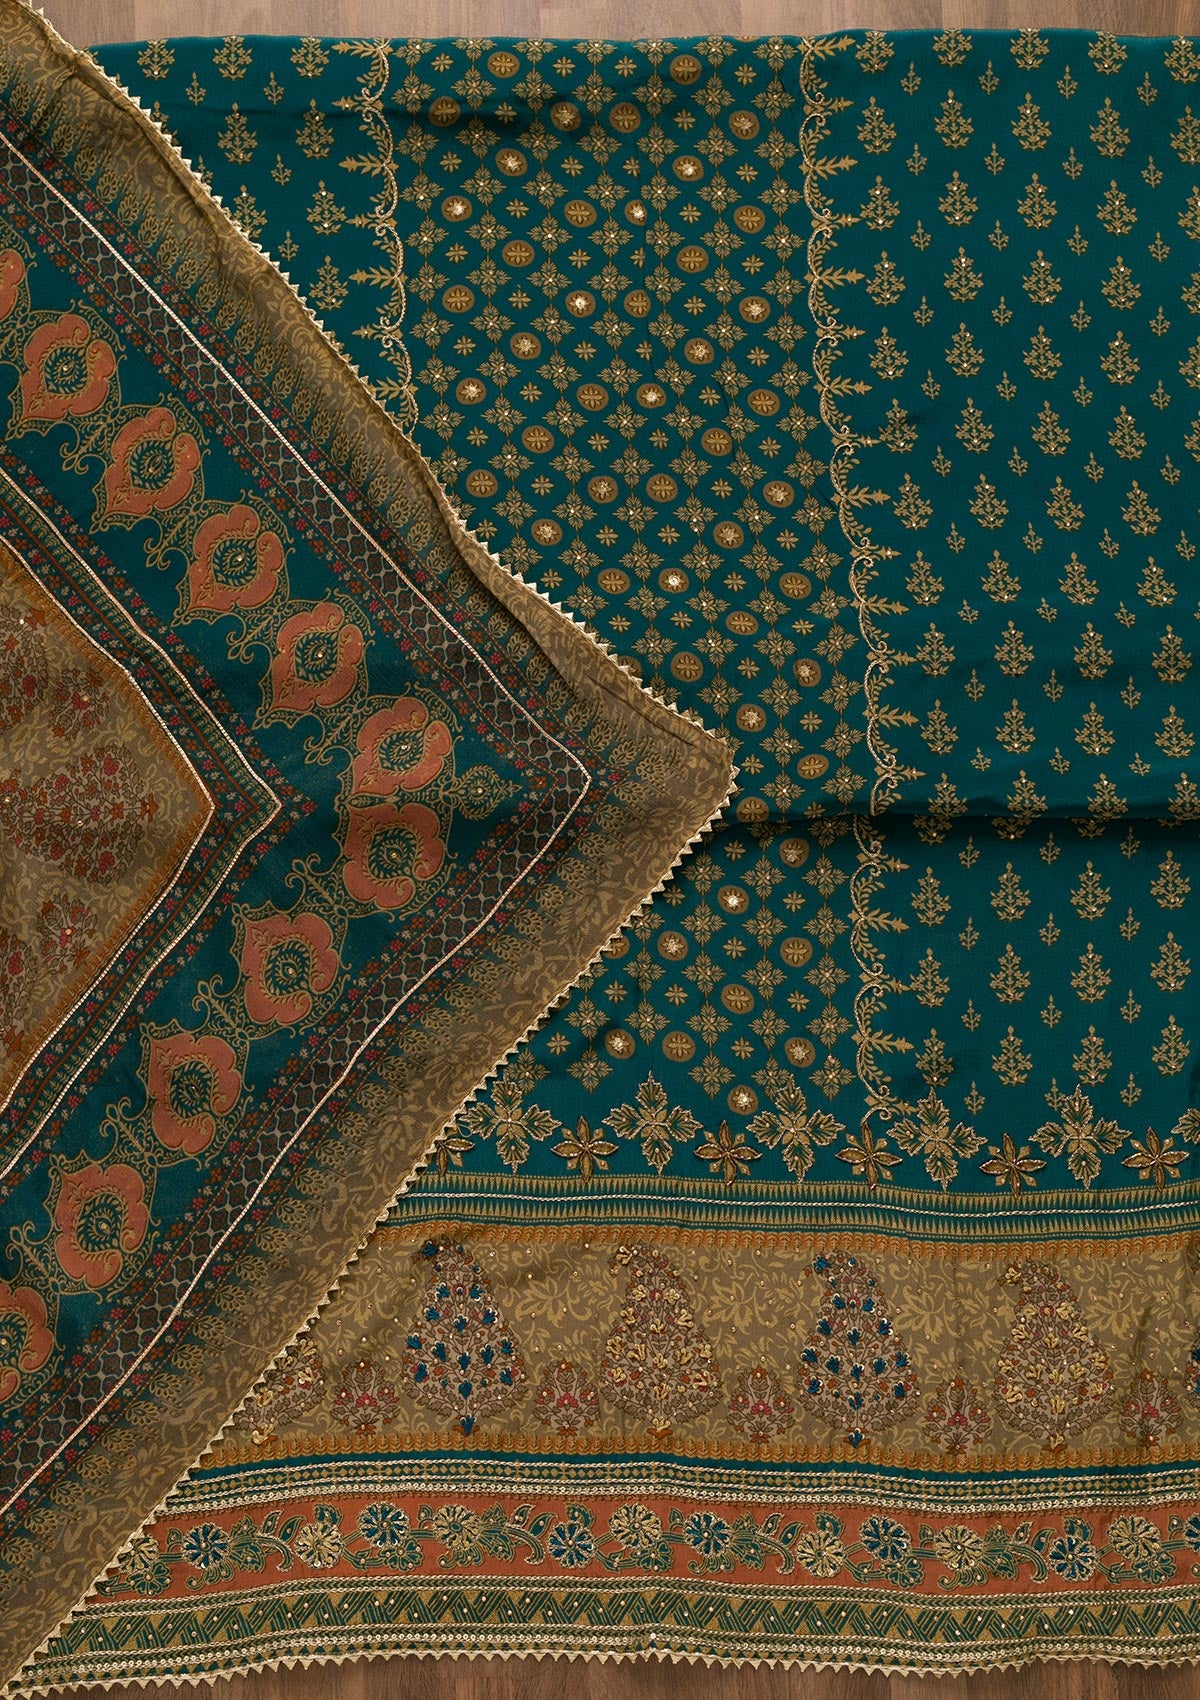 Peacock Blue Printed Crepe Unstitched Salwar Suit